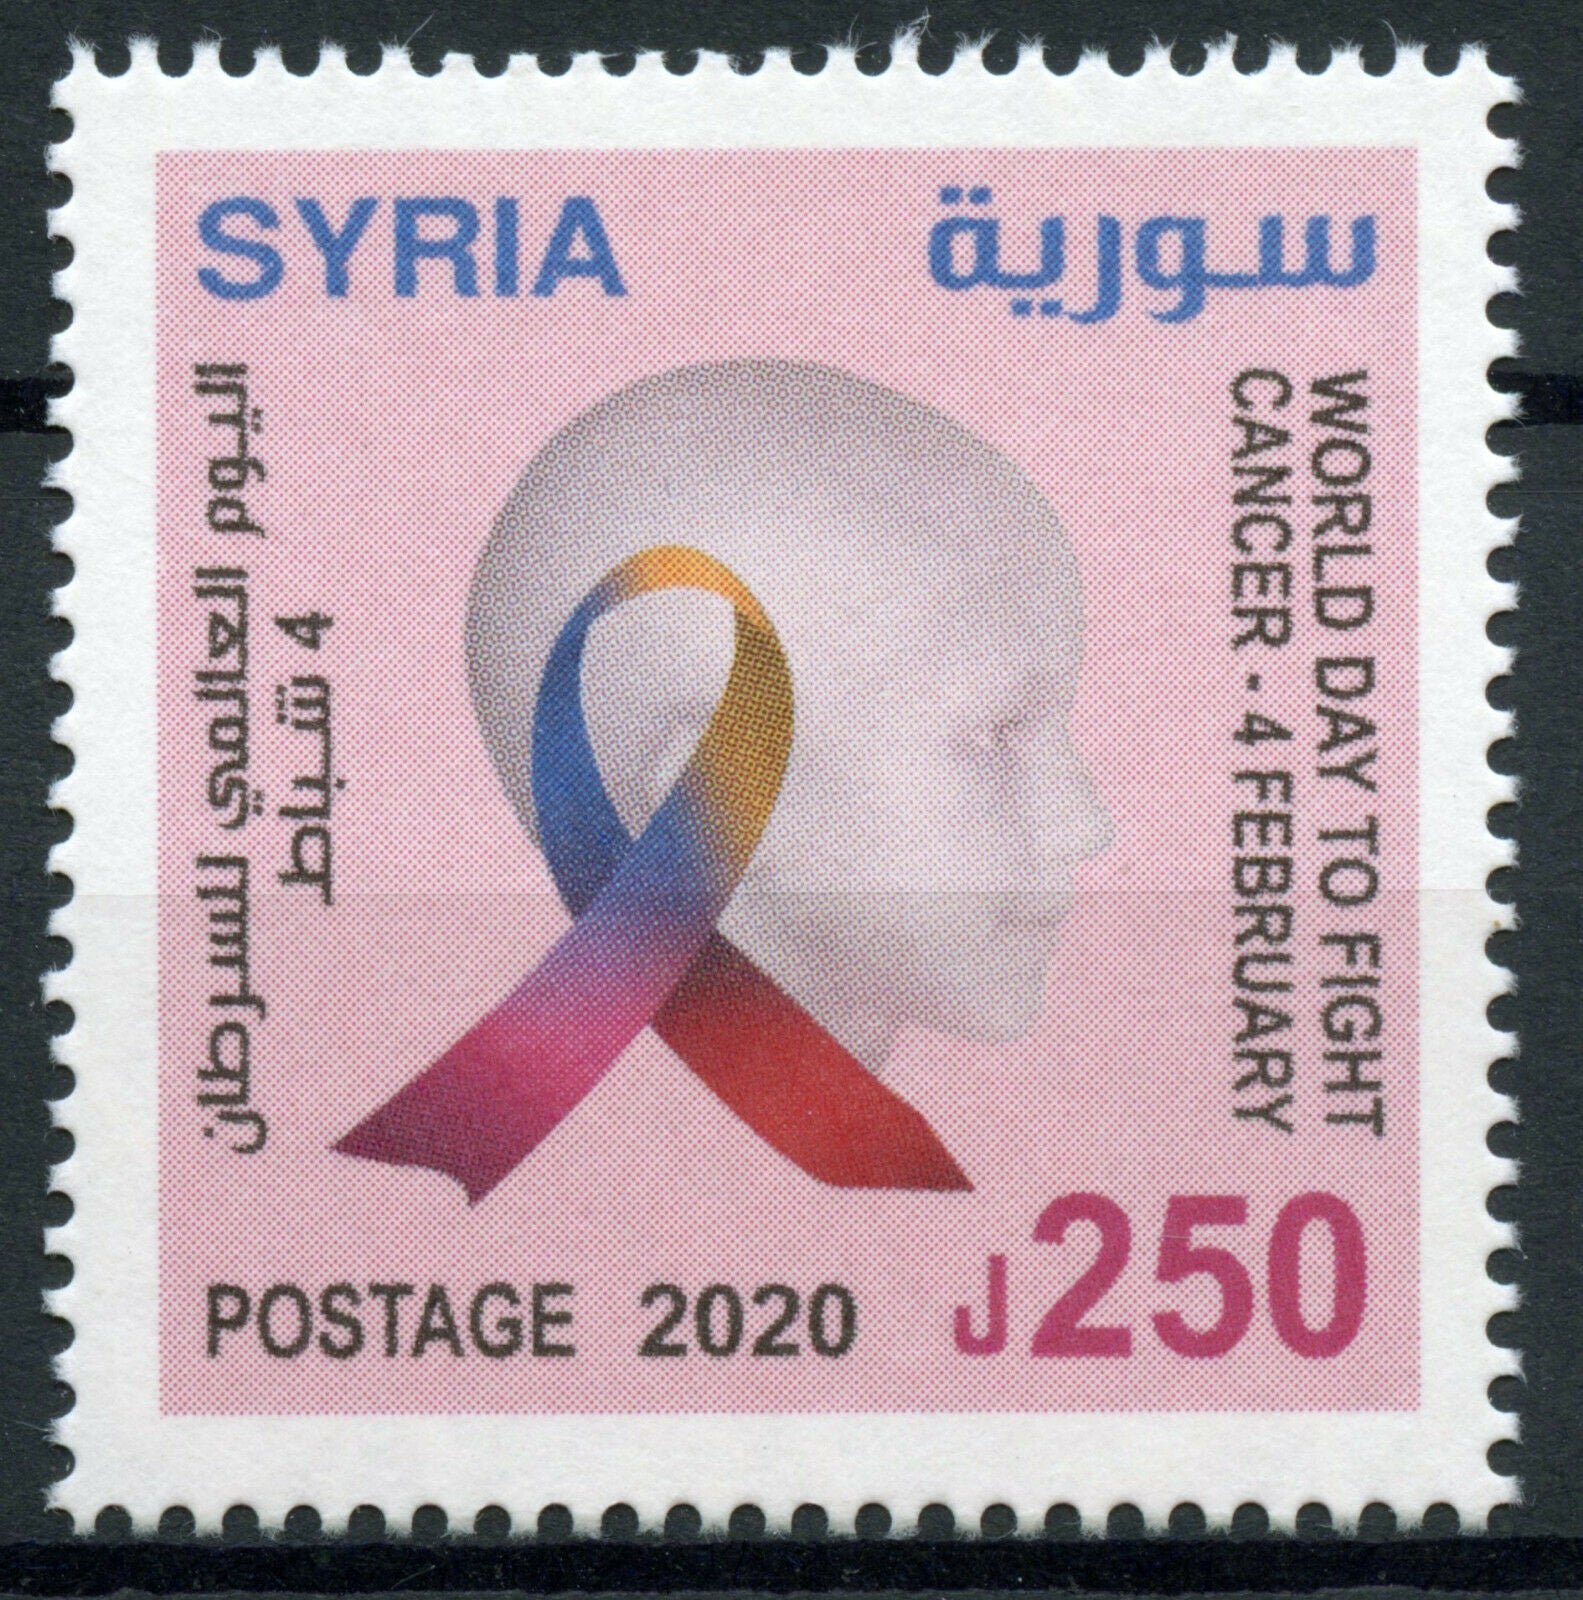 Syria Medical Stamps 2020 MNH World Day to Fight Cancer Pink Ribbon 1v Set